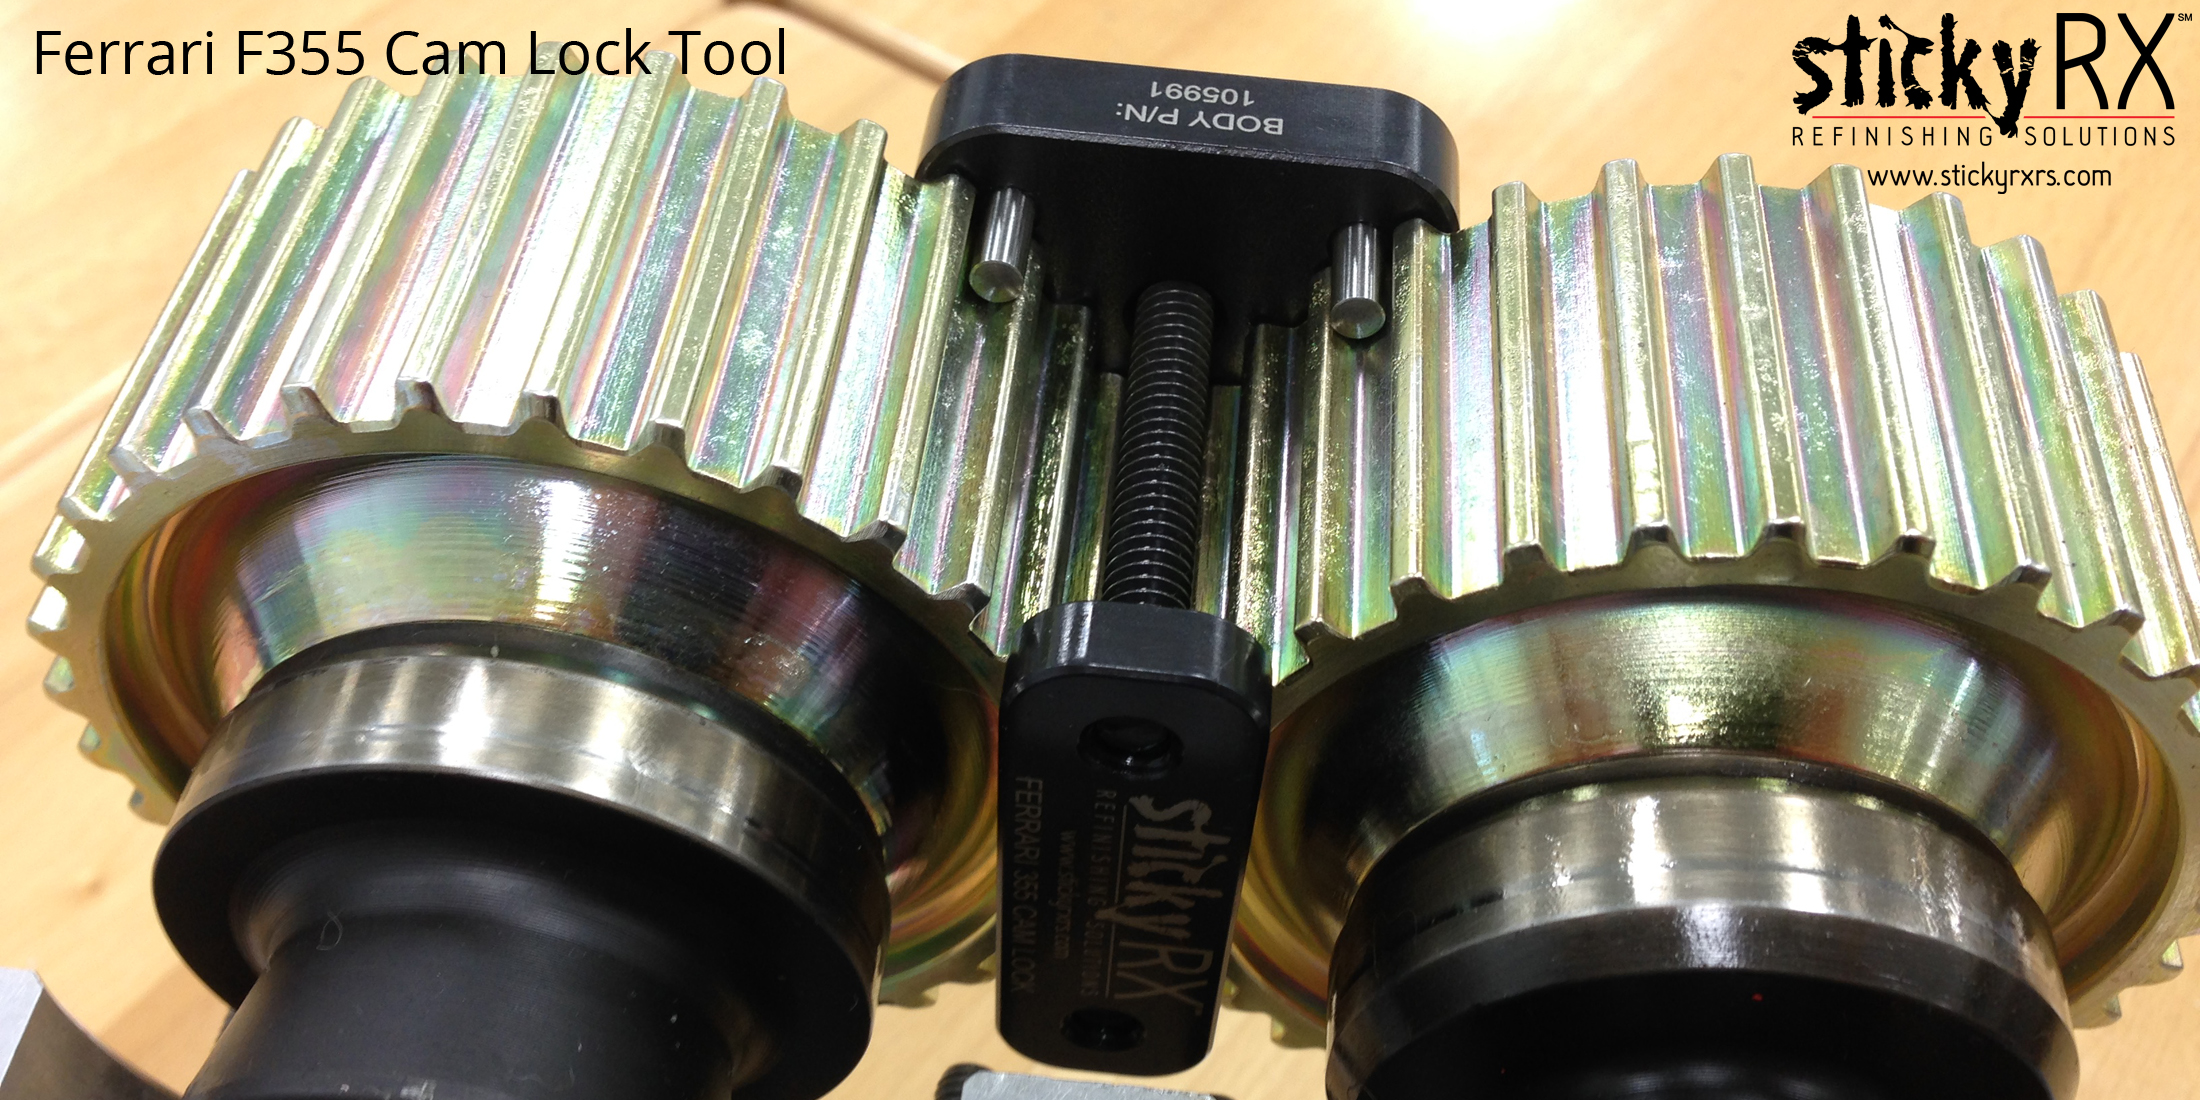 Sticky RX Refinishing Solutions_Ferrari_355_CAM Locks-04